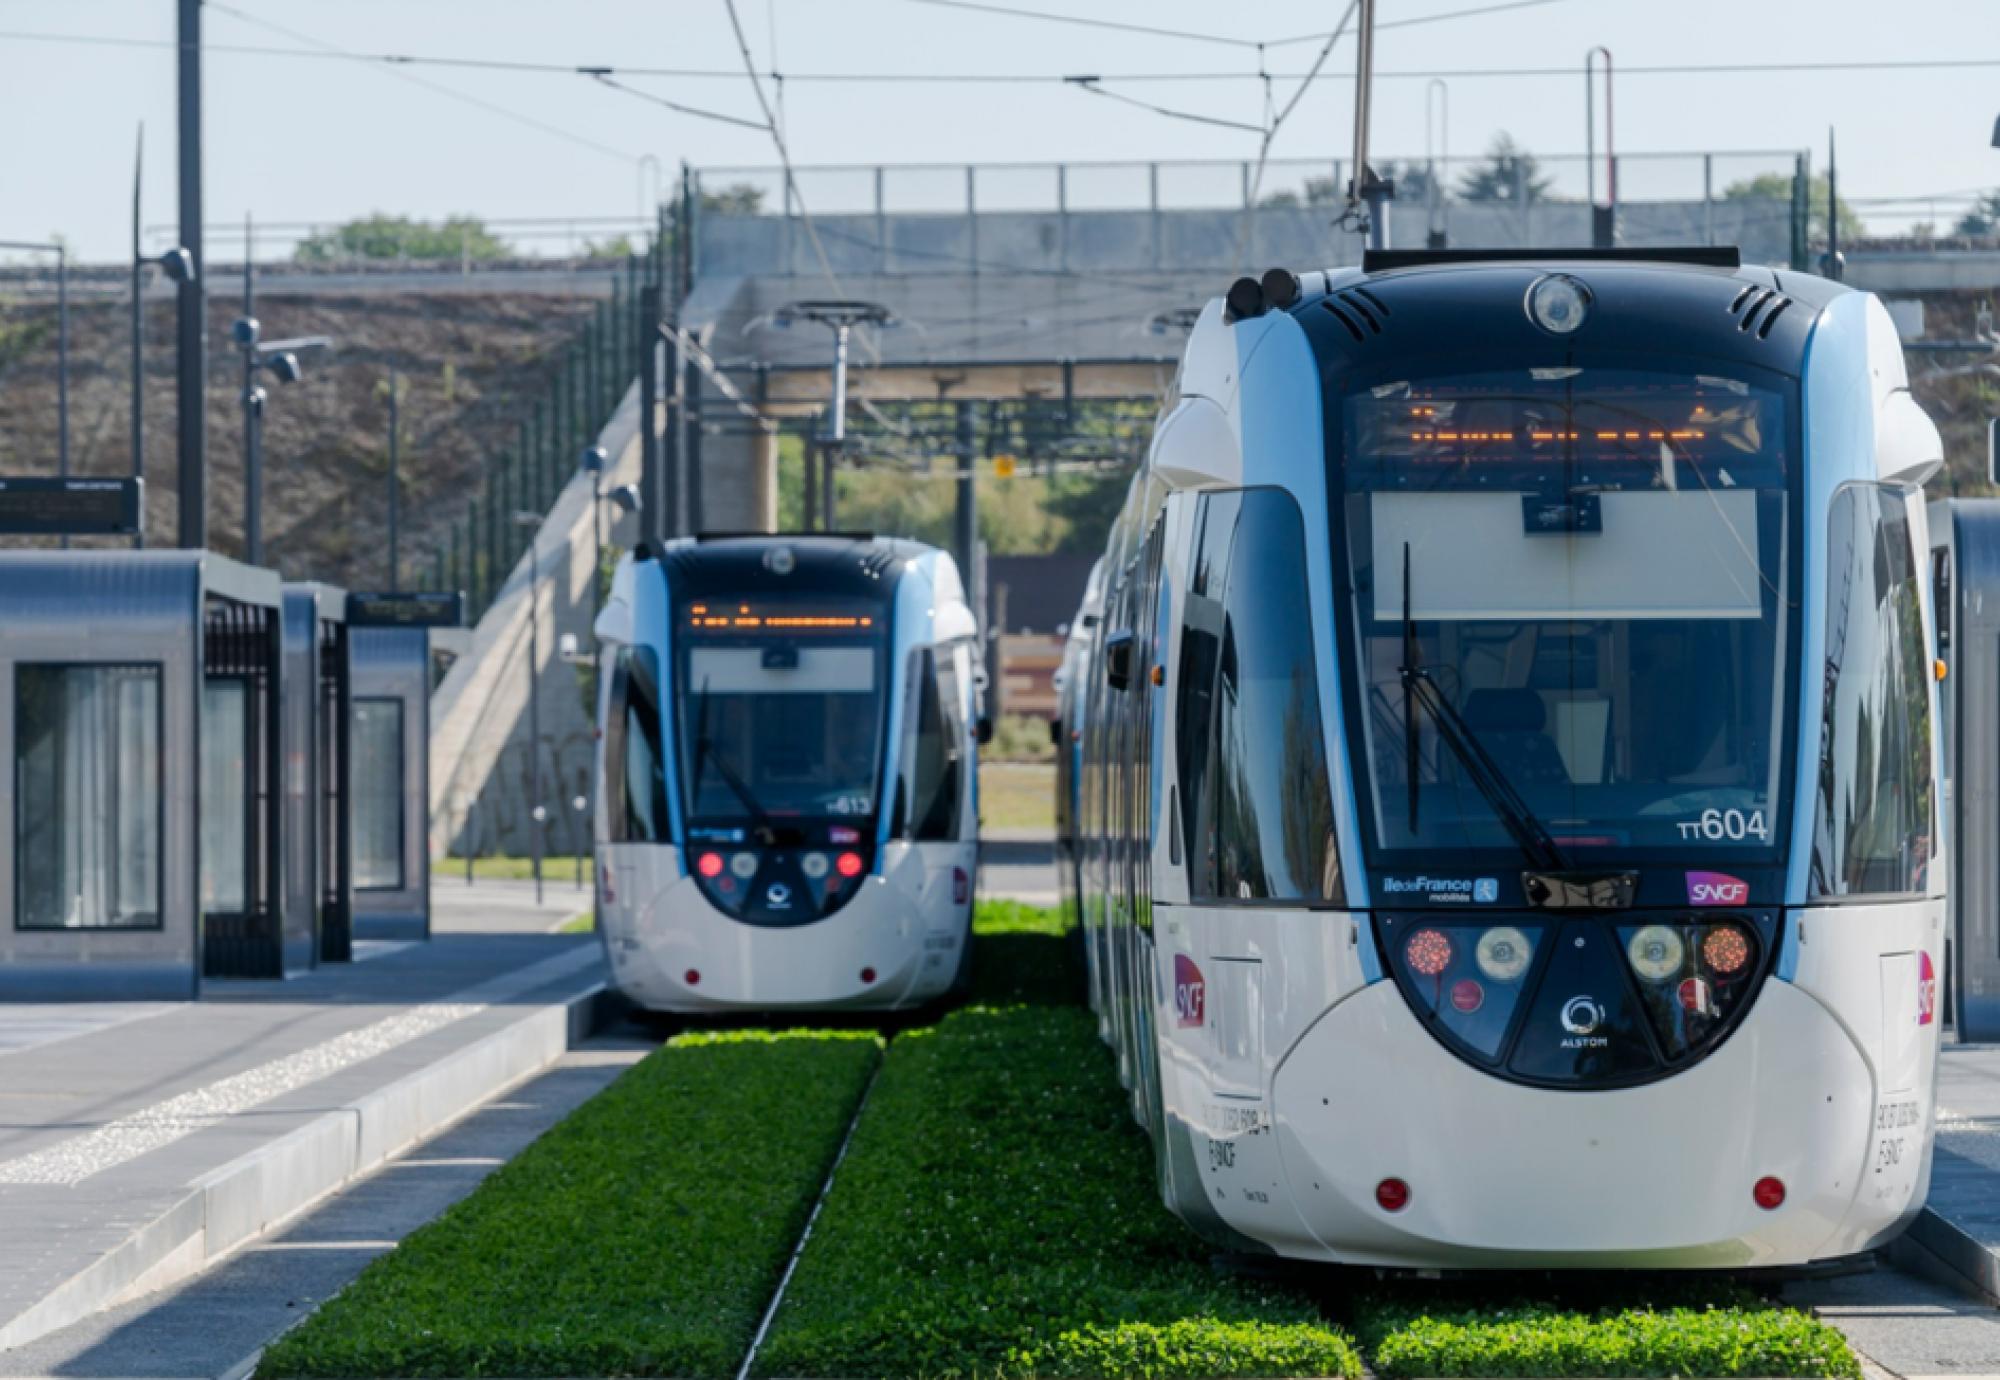 New Tram-Train begins service in France